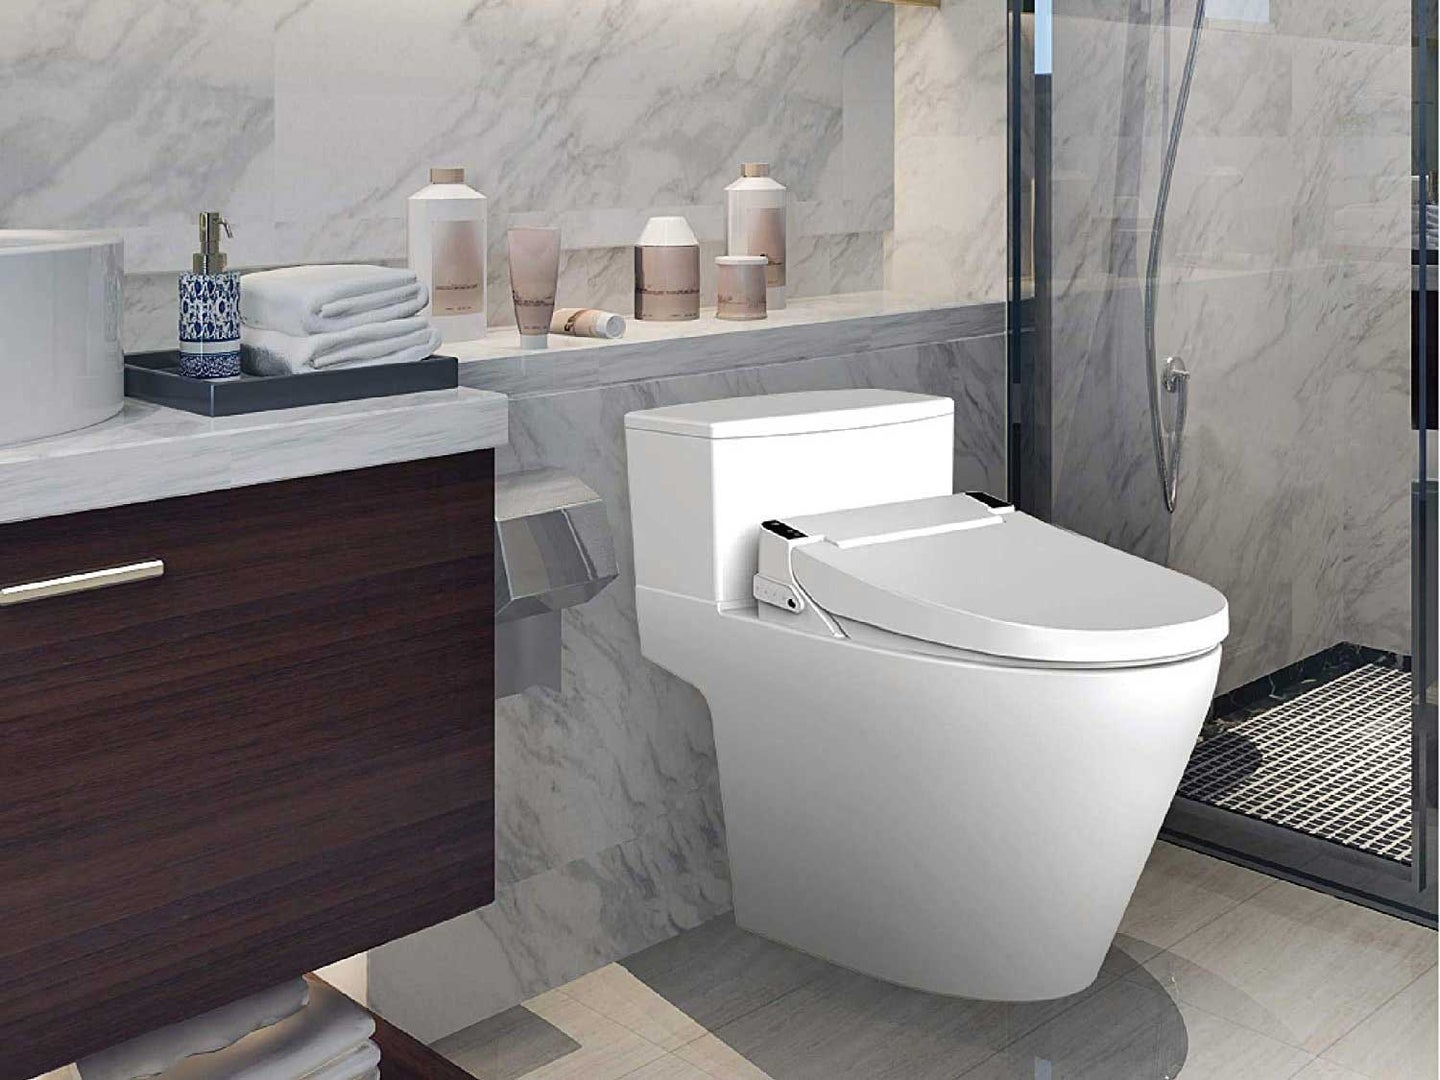 VOVO electronic bidet smart toilet seat in bathroom.